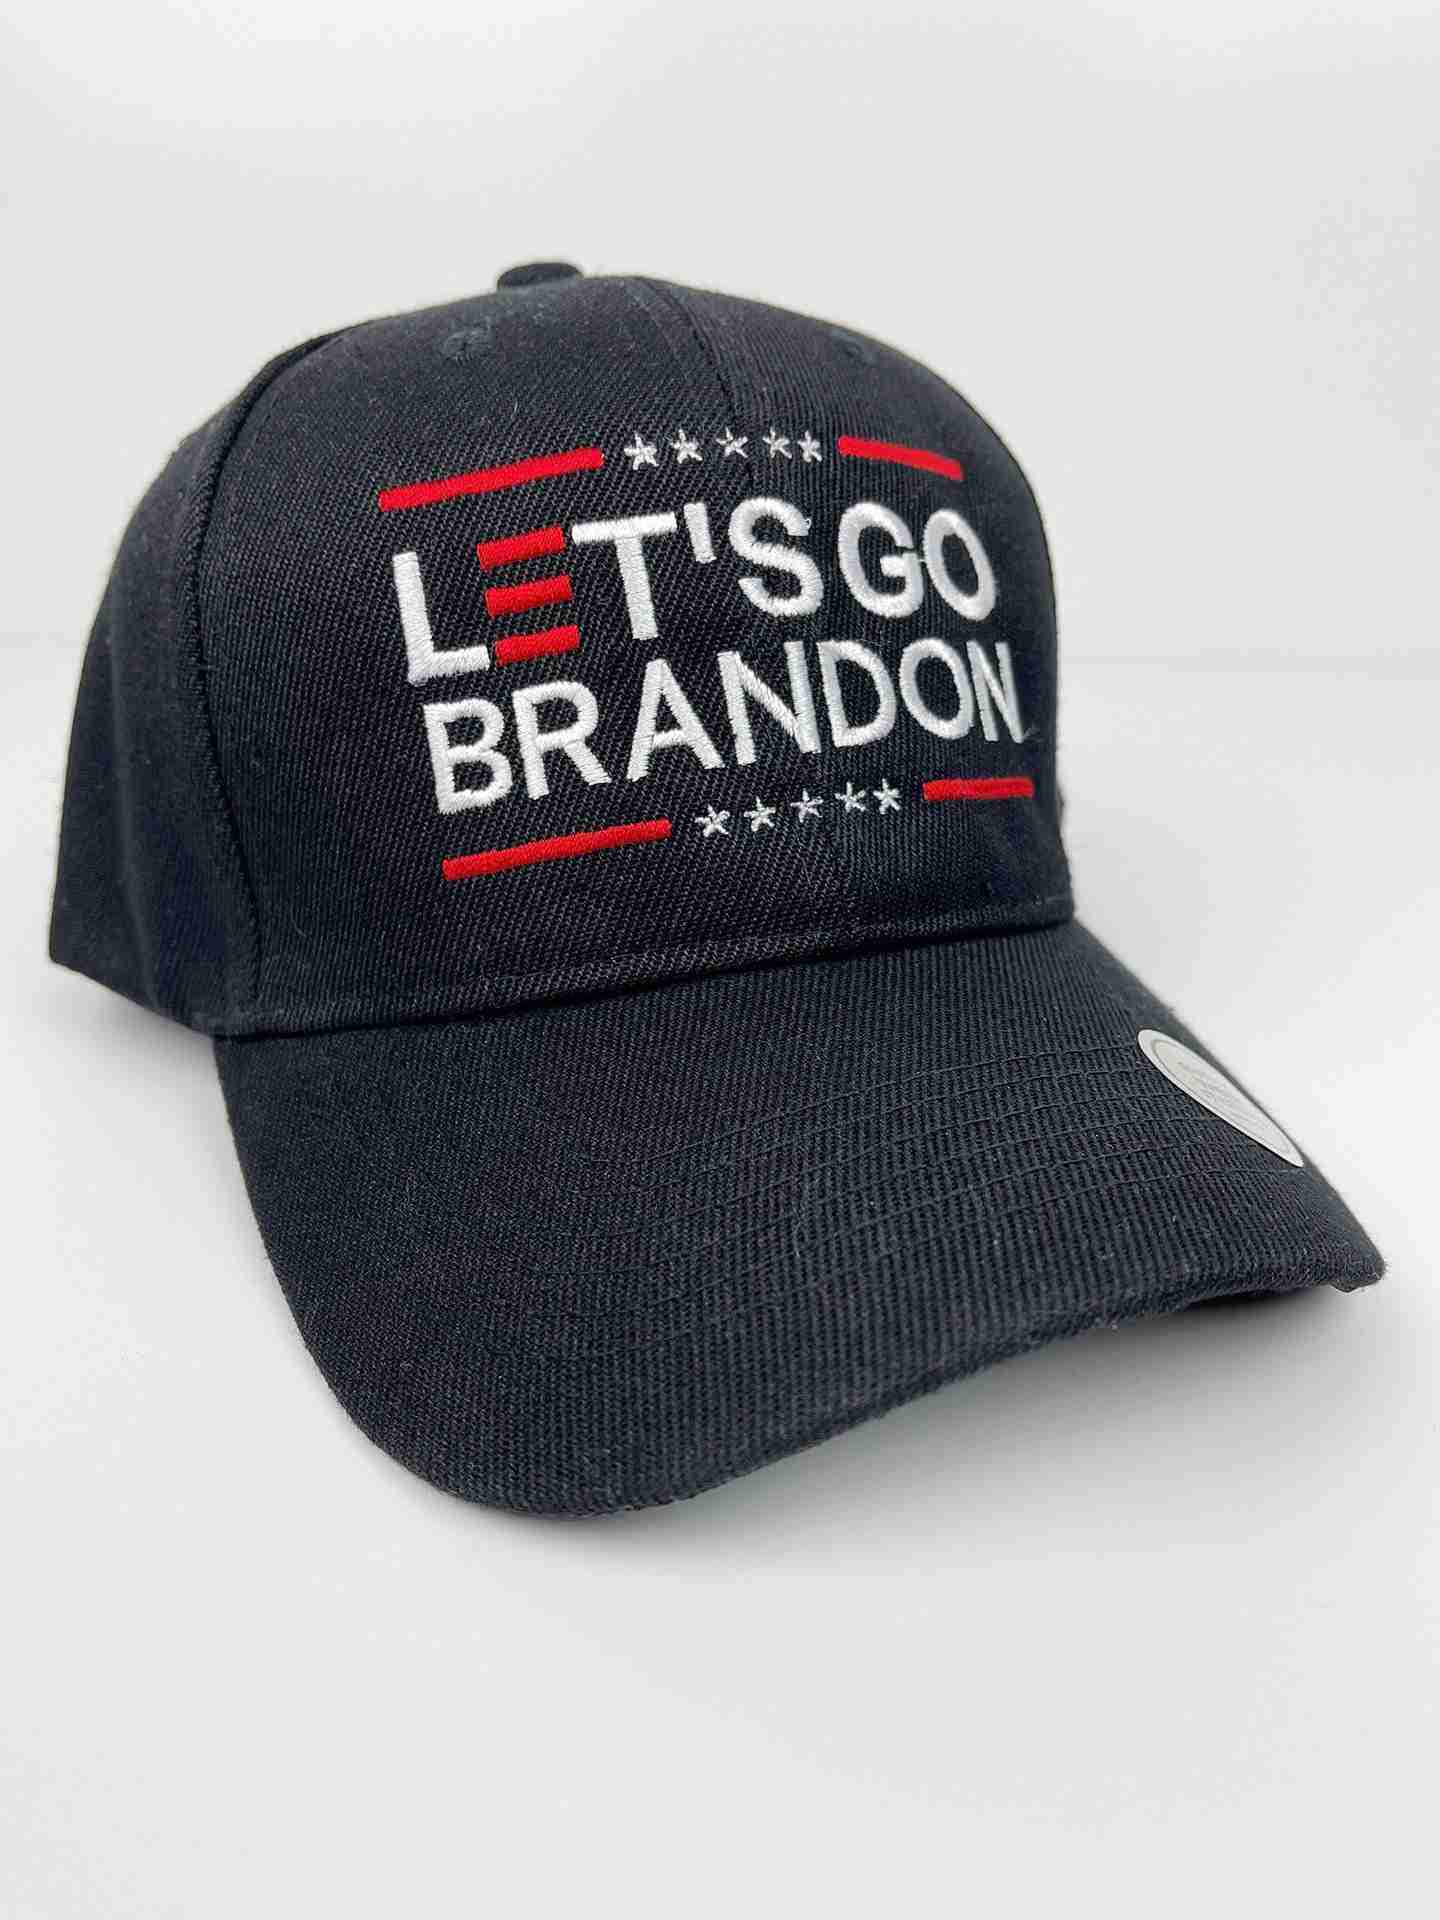 Lets go Brandon hat Adjustable Classic Casual Washable American Flag Sandwich Hats for Men Women